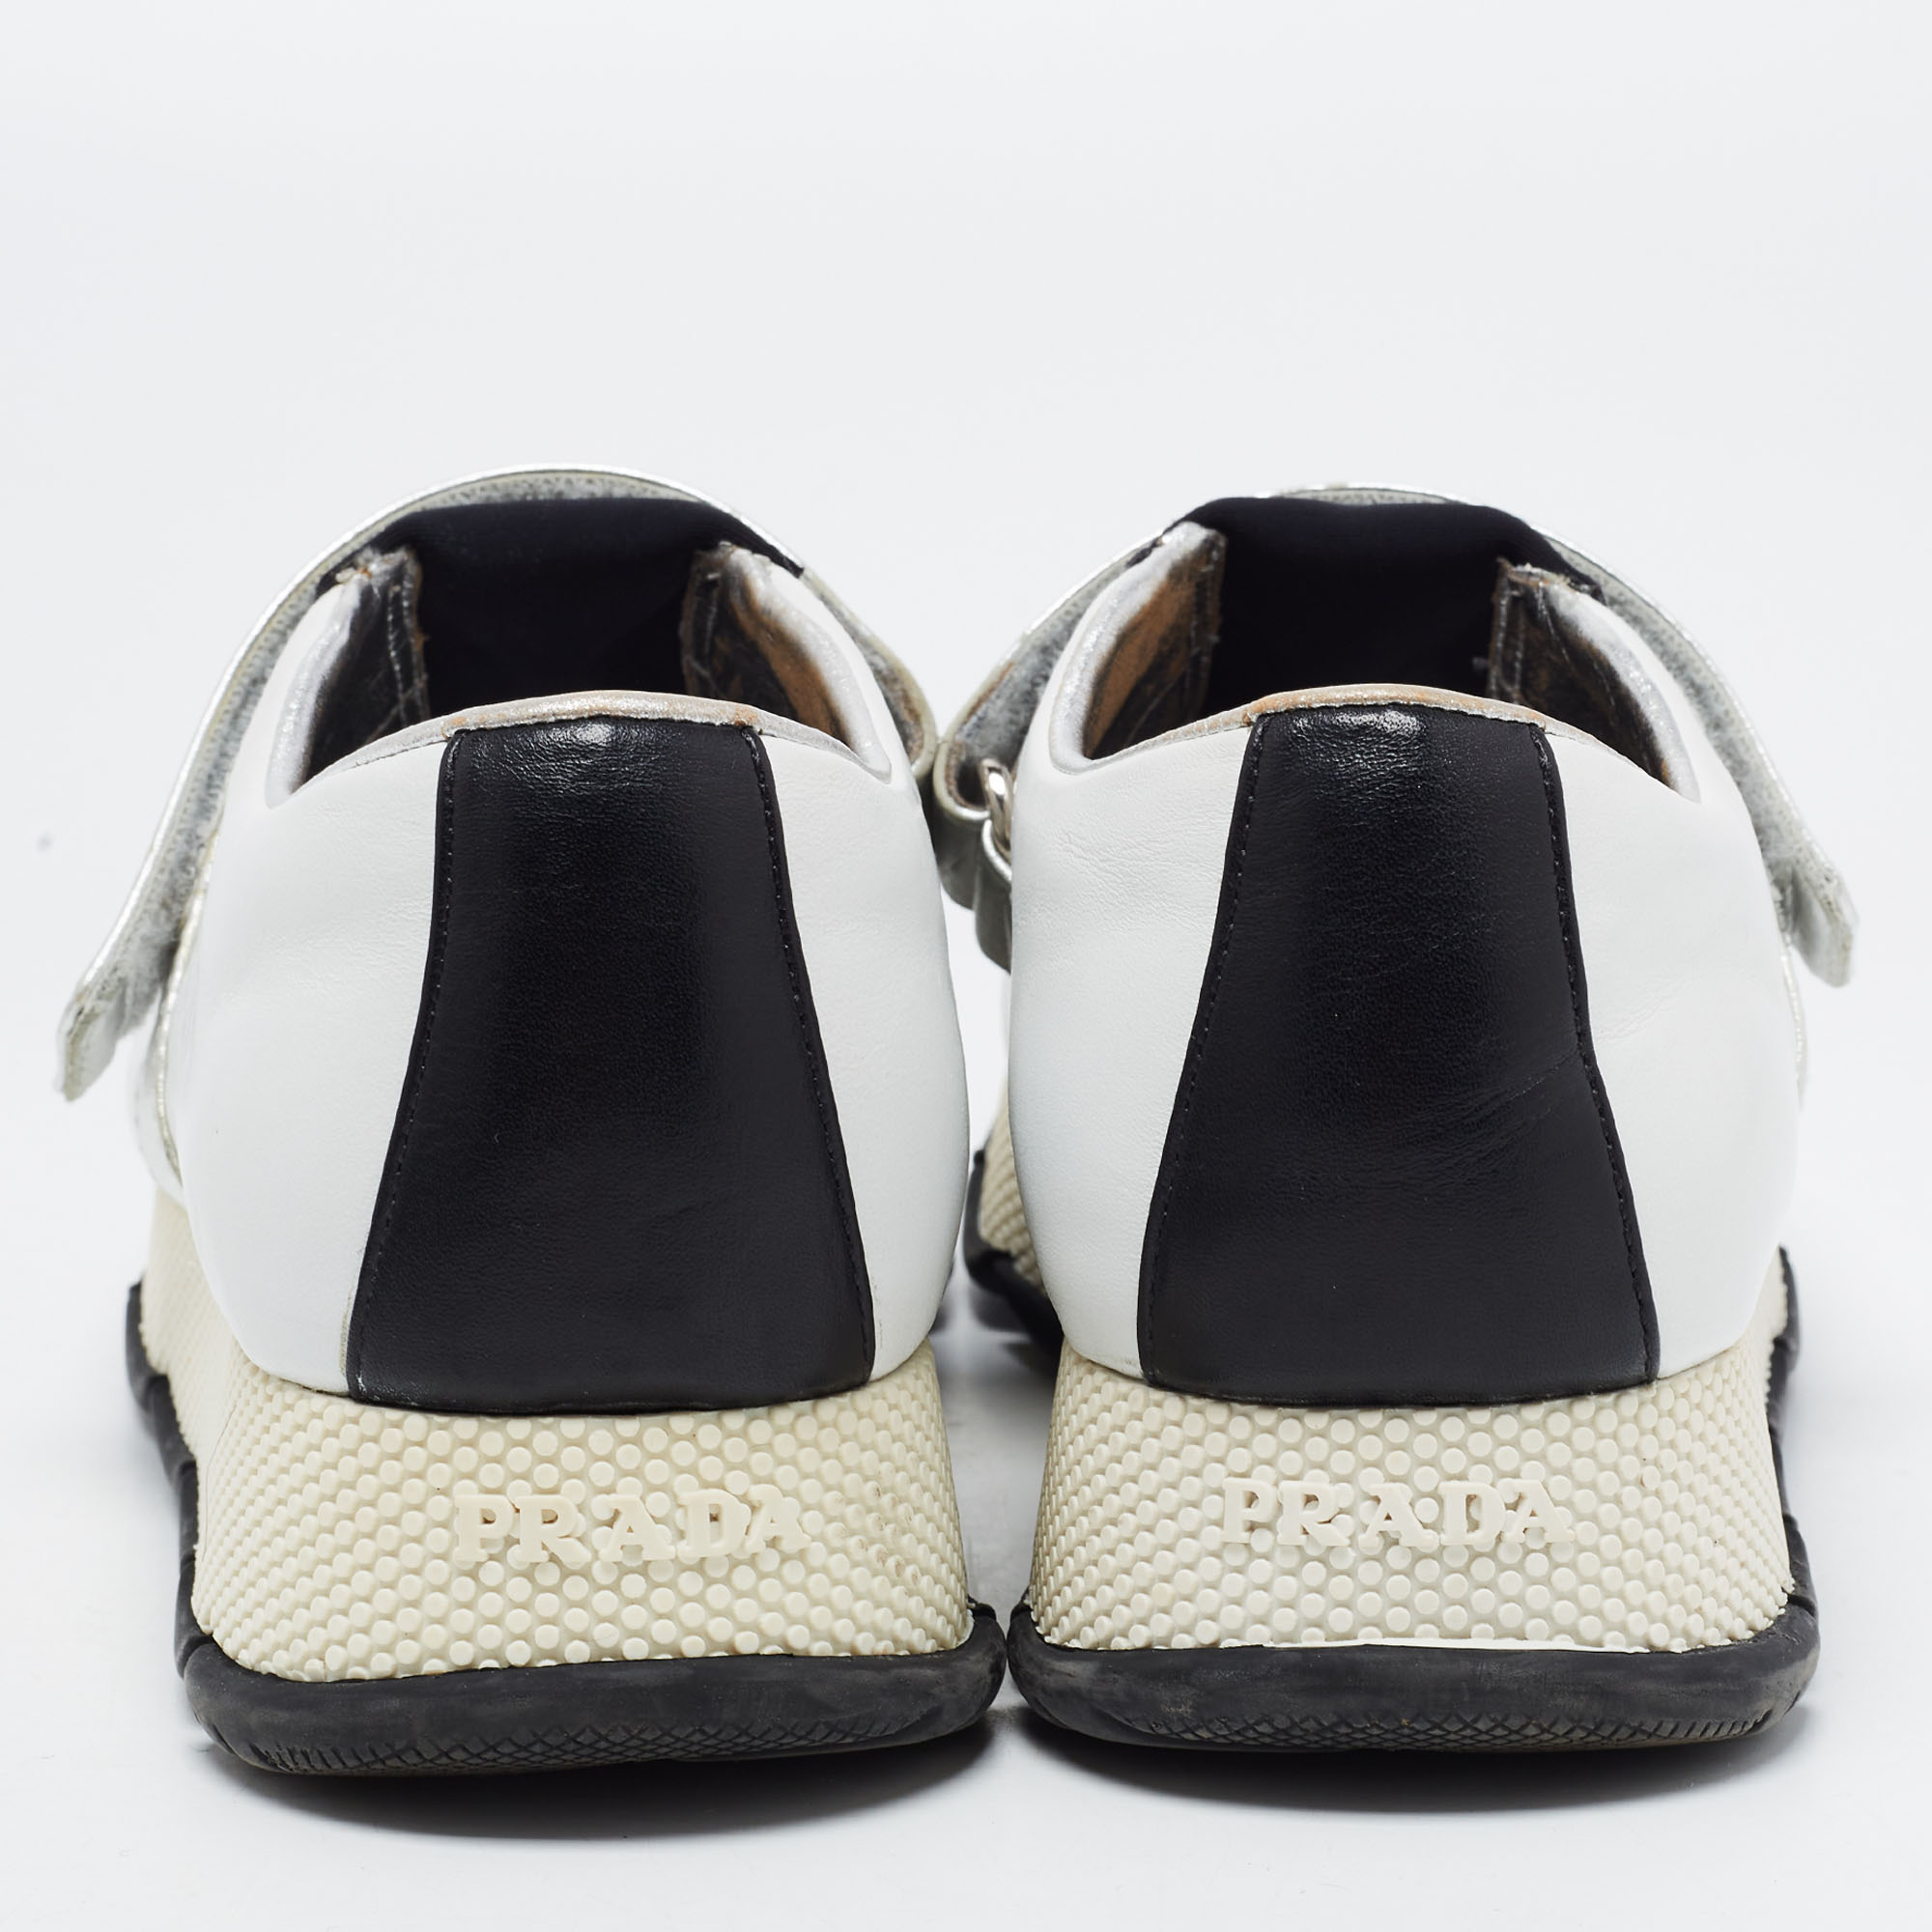 Prada White/Black Leather Low Top Sneakers Size 37.5